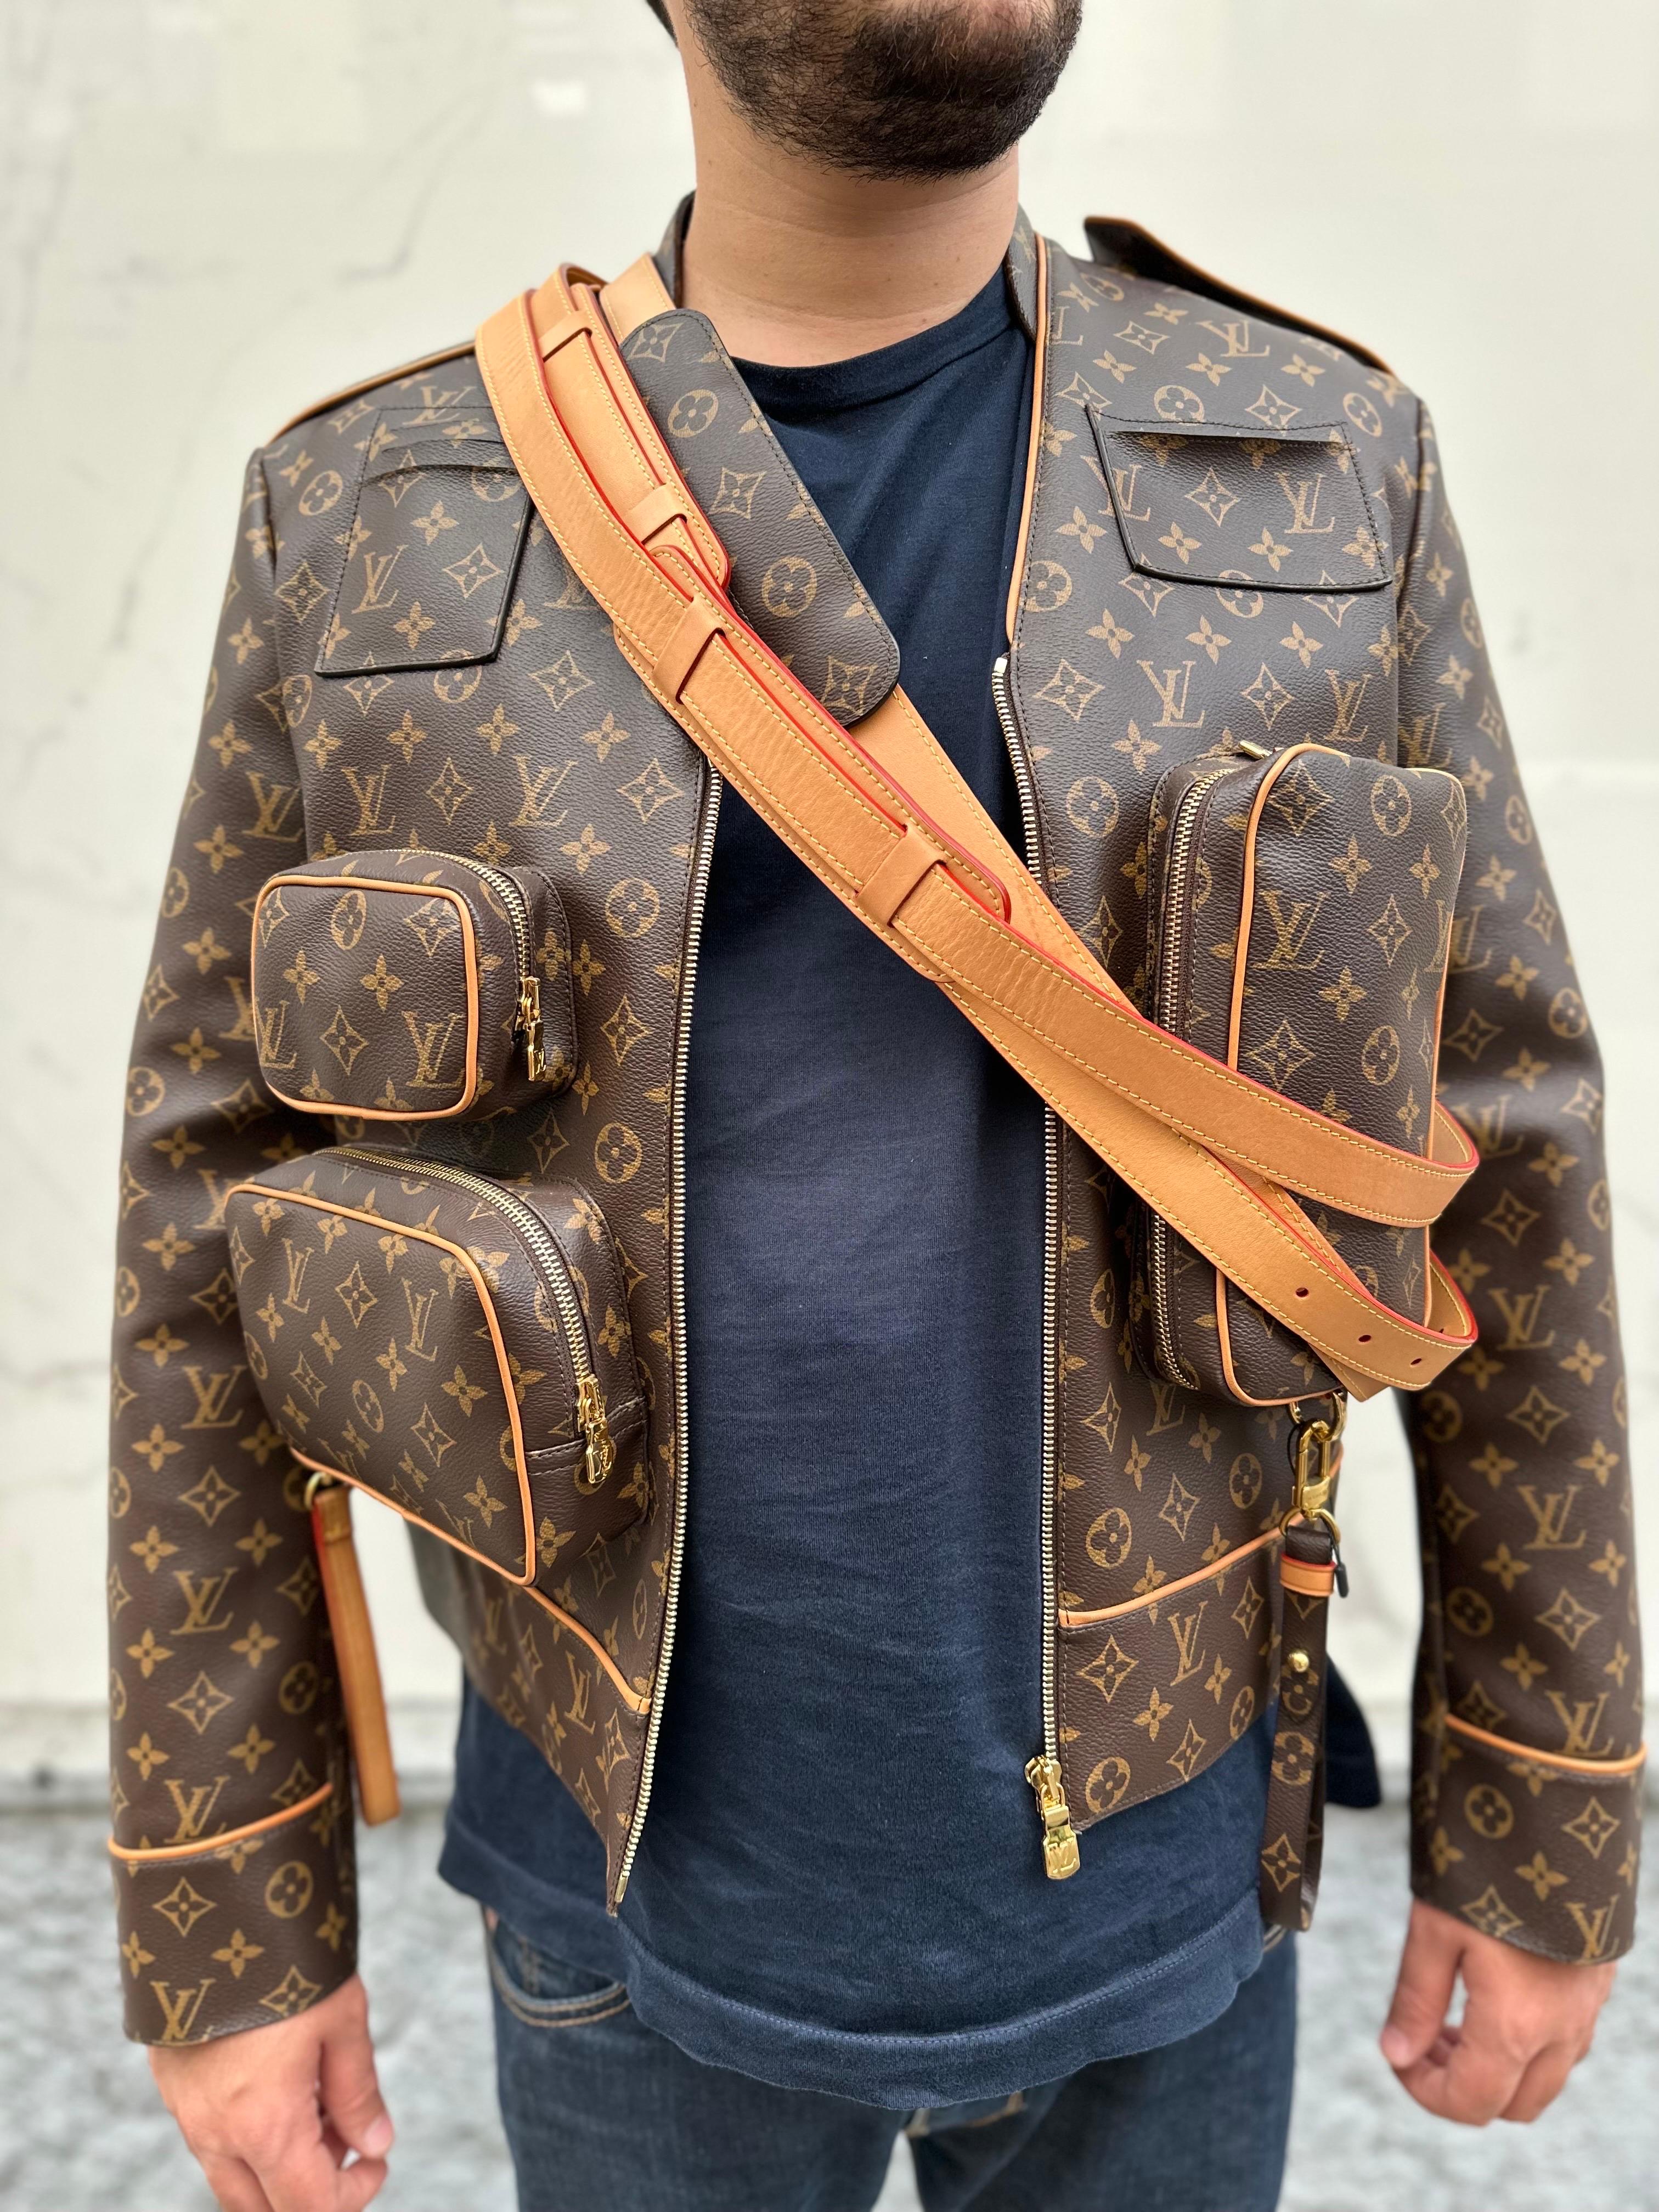 2019 Louis Vuitton Monogram Leather Men's Jacket Limited Edition For Sale 12